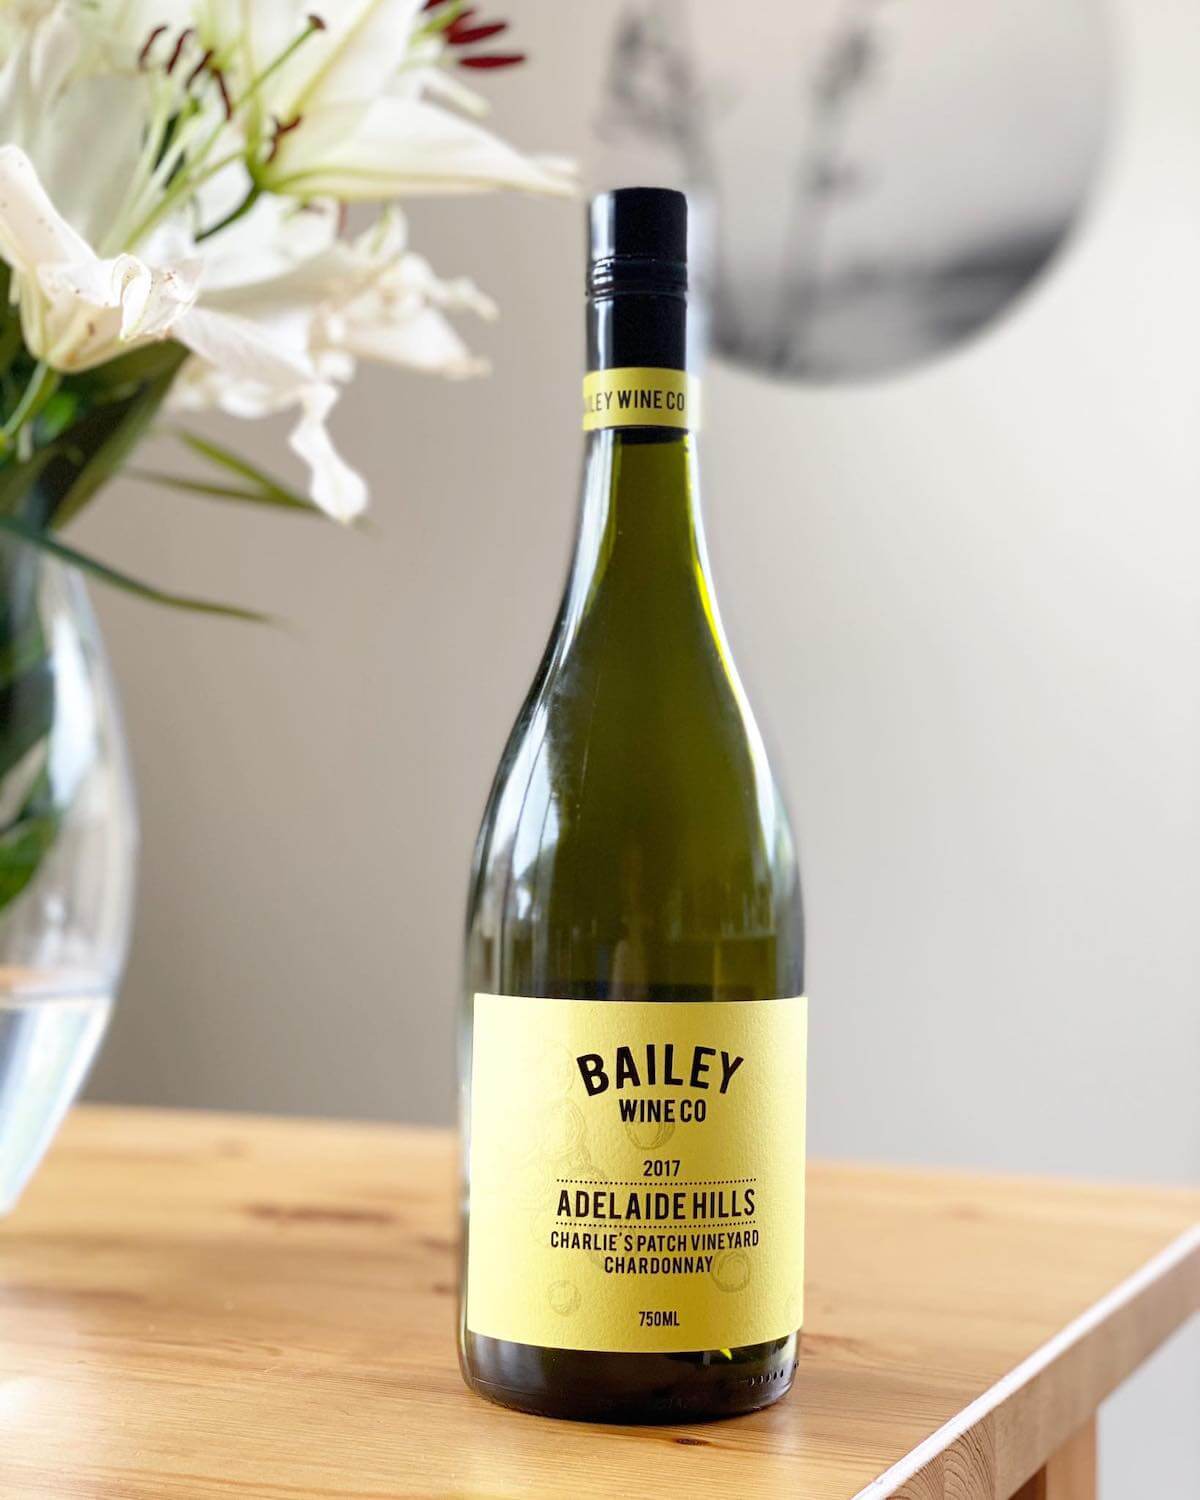 Bailey Wine Co 2017 Charlie’s Patch Chardonnay